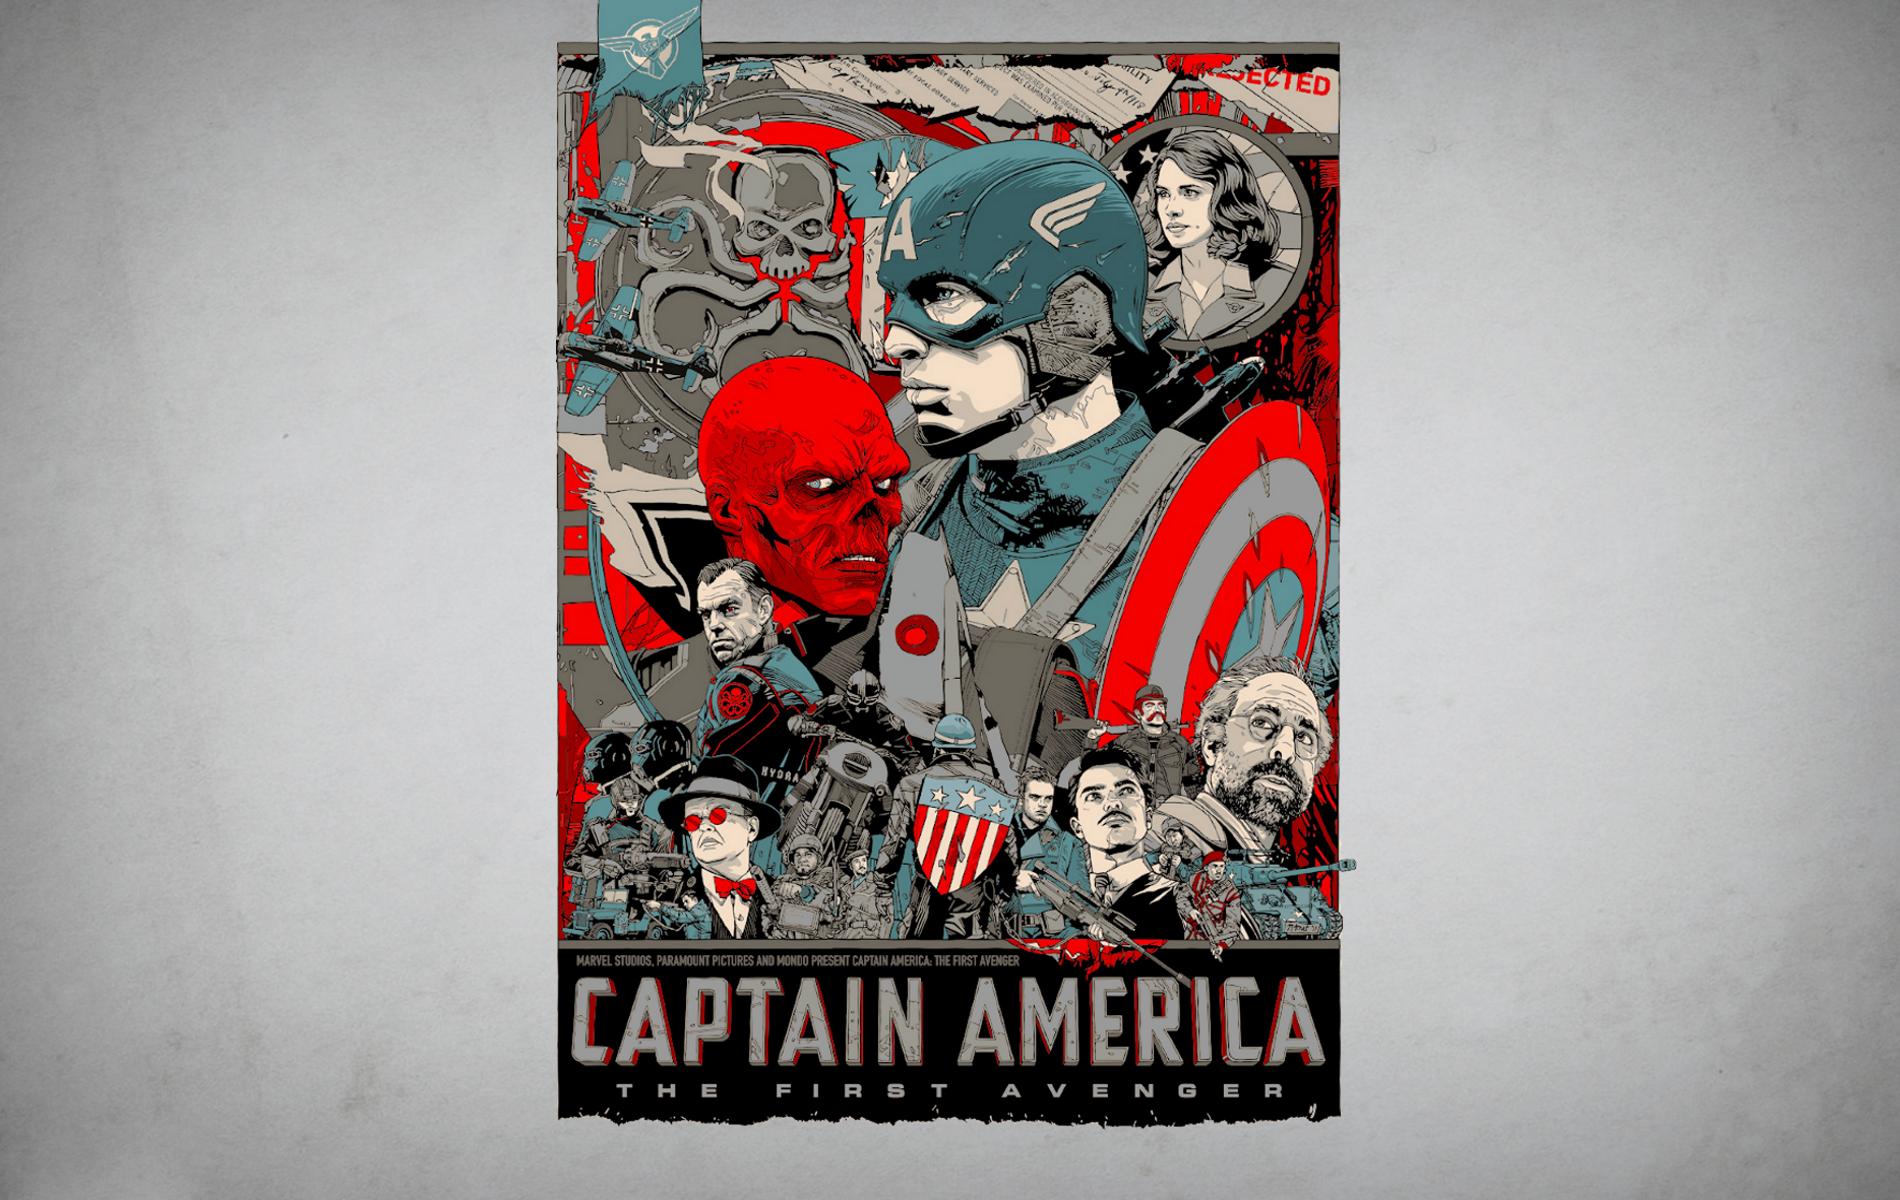 269838 Hintergrundbild herunterladen comics, captain america, roter schädel (marvel comics) - Bildschirmschoner und Bilder kostenlos